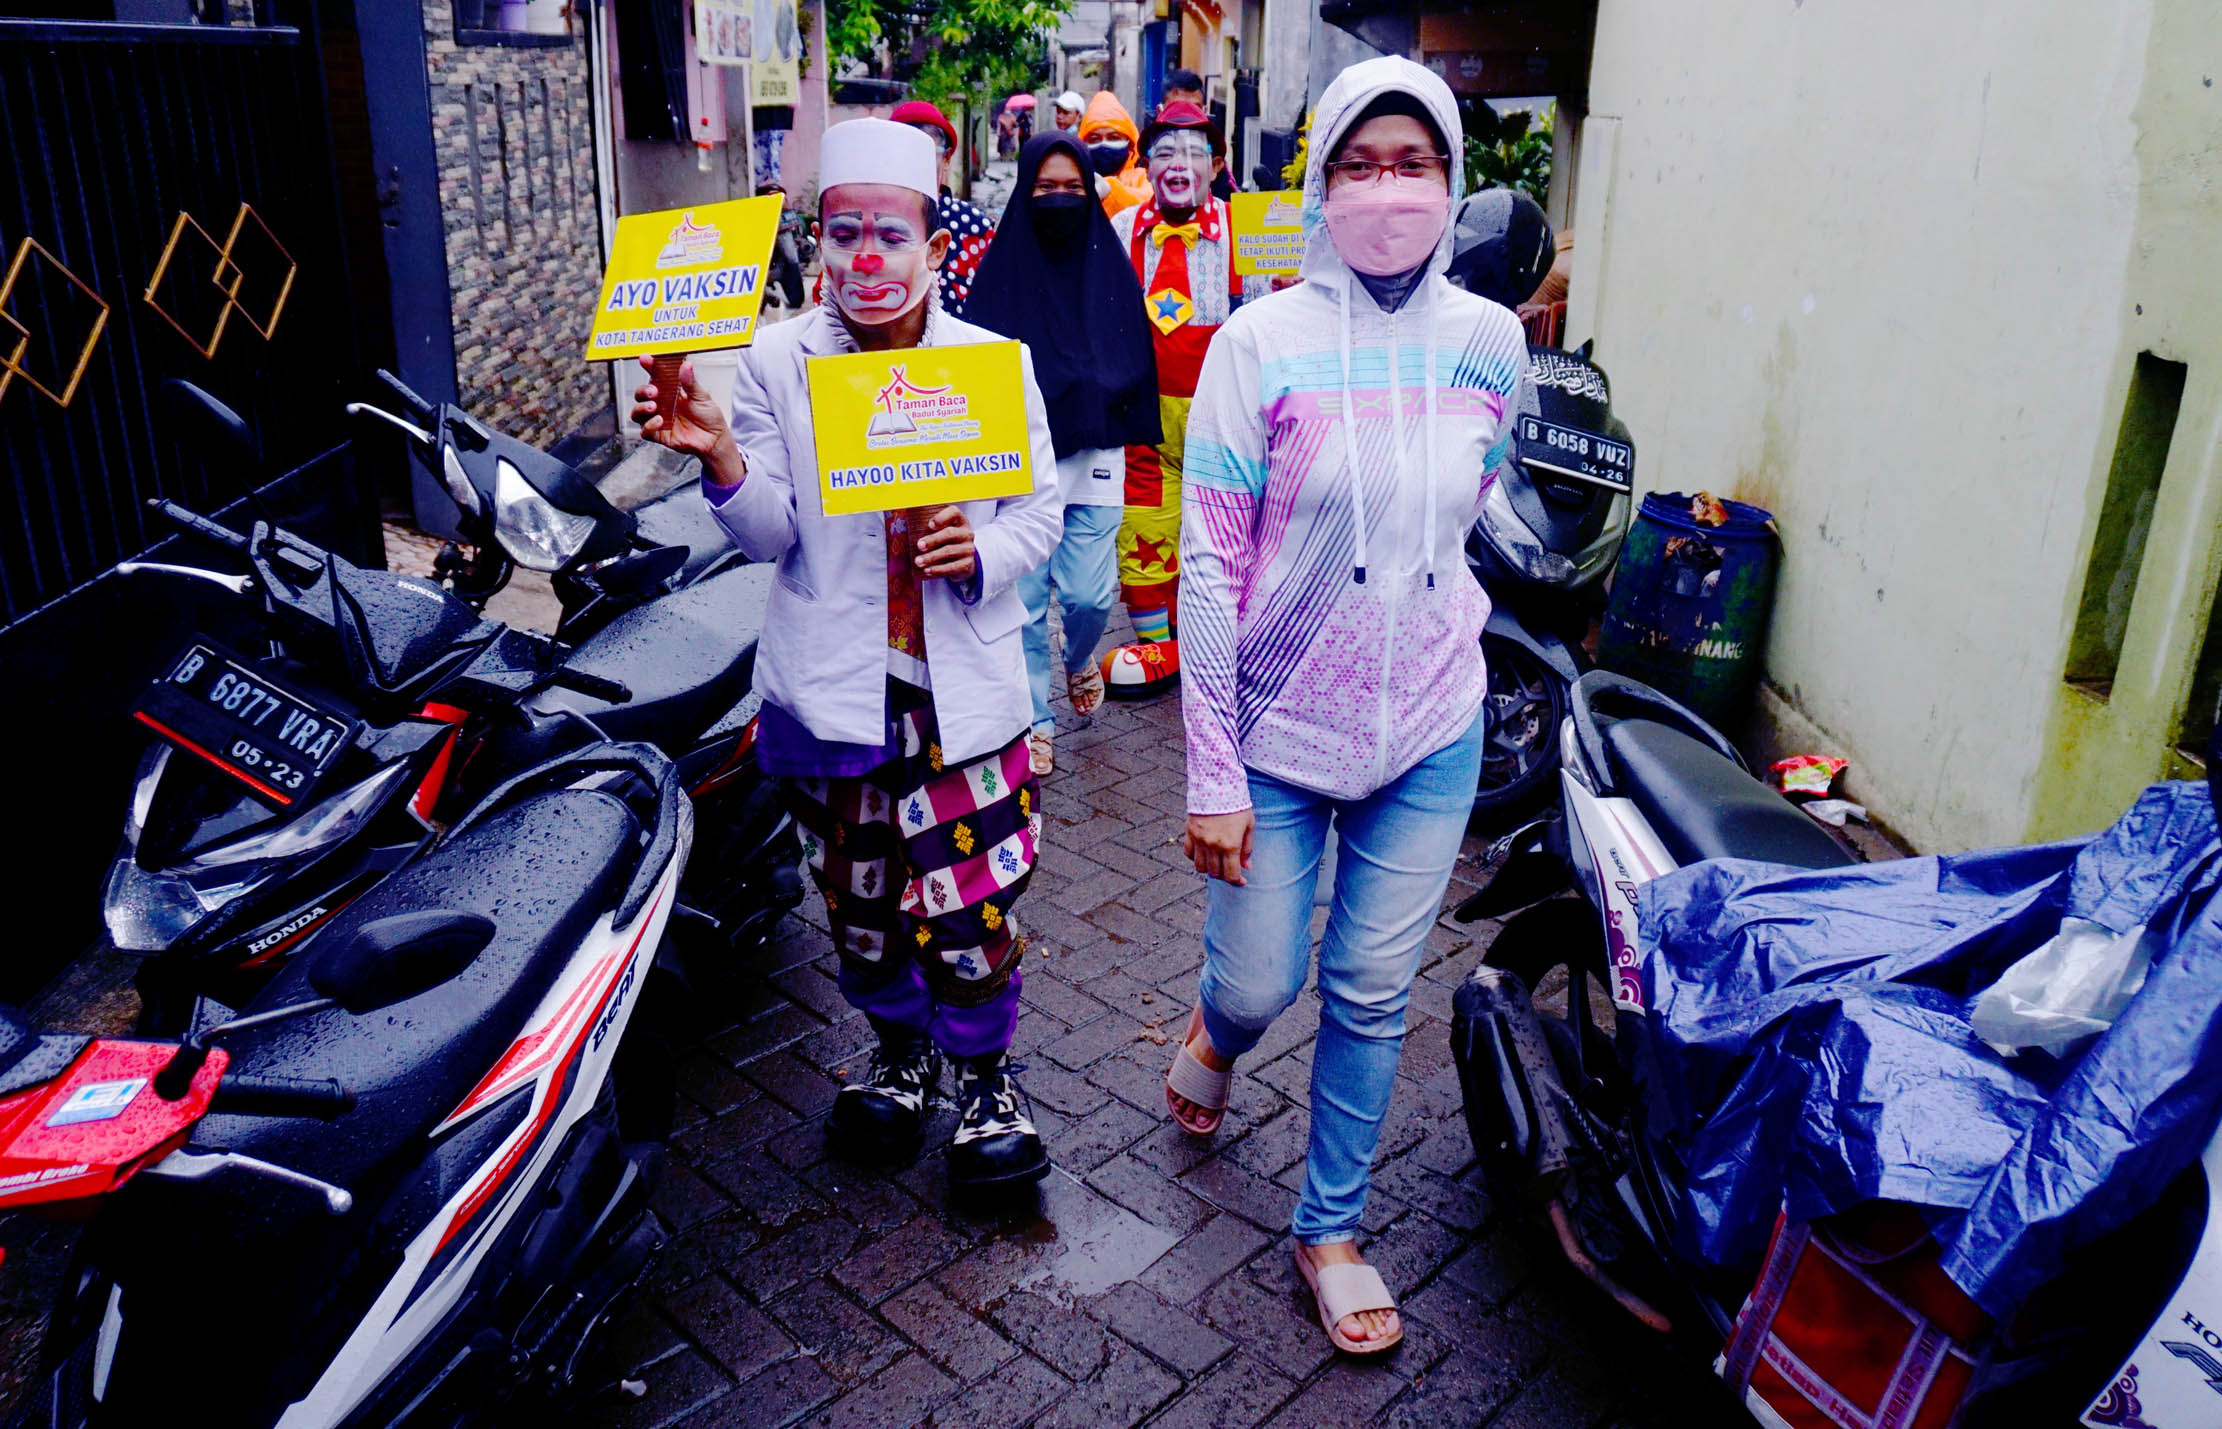 Badut Yahya dan kawan-kawan ikut serta mengkampanyekan dan ajakan kepada warga untuk melakukan vaksin, para badut tersebut berkeliling dari rumah-kerumah untuk menjemput warga yang akan di vaksin di kawasan Pinang Kota Tangerang, Selasa 14 September 2021. Foto : Panji Asmoro/TrenAsia                           